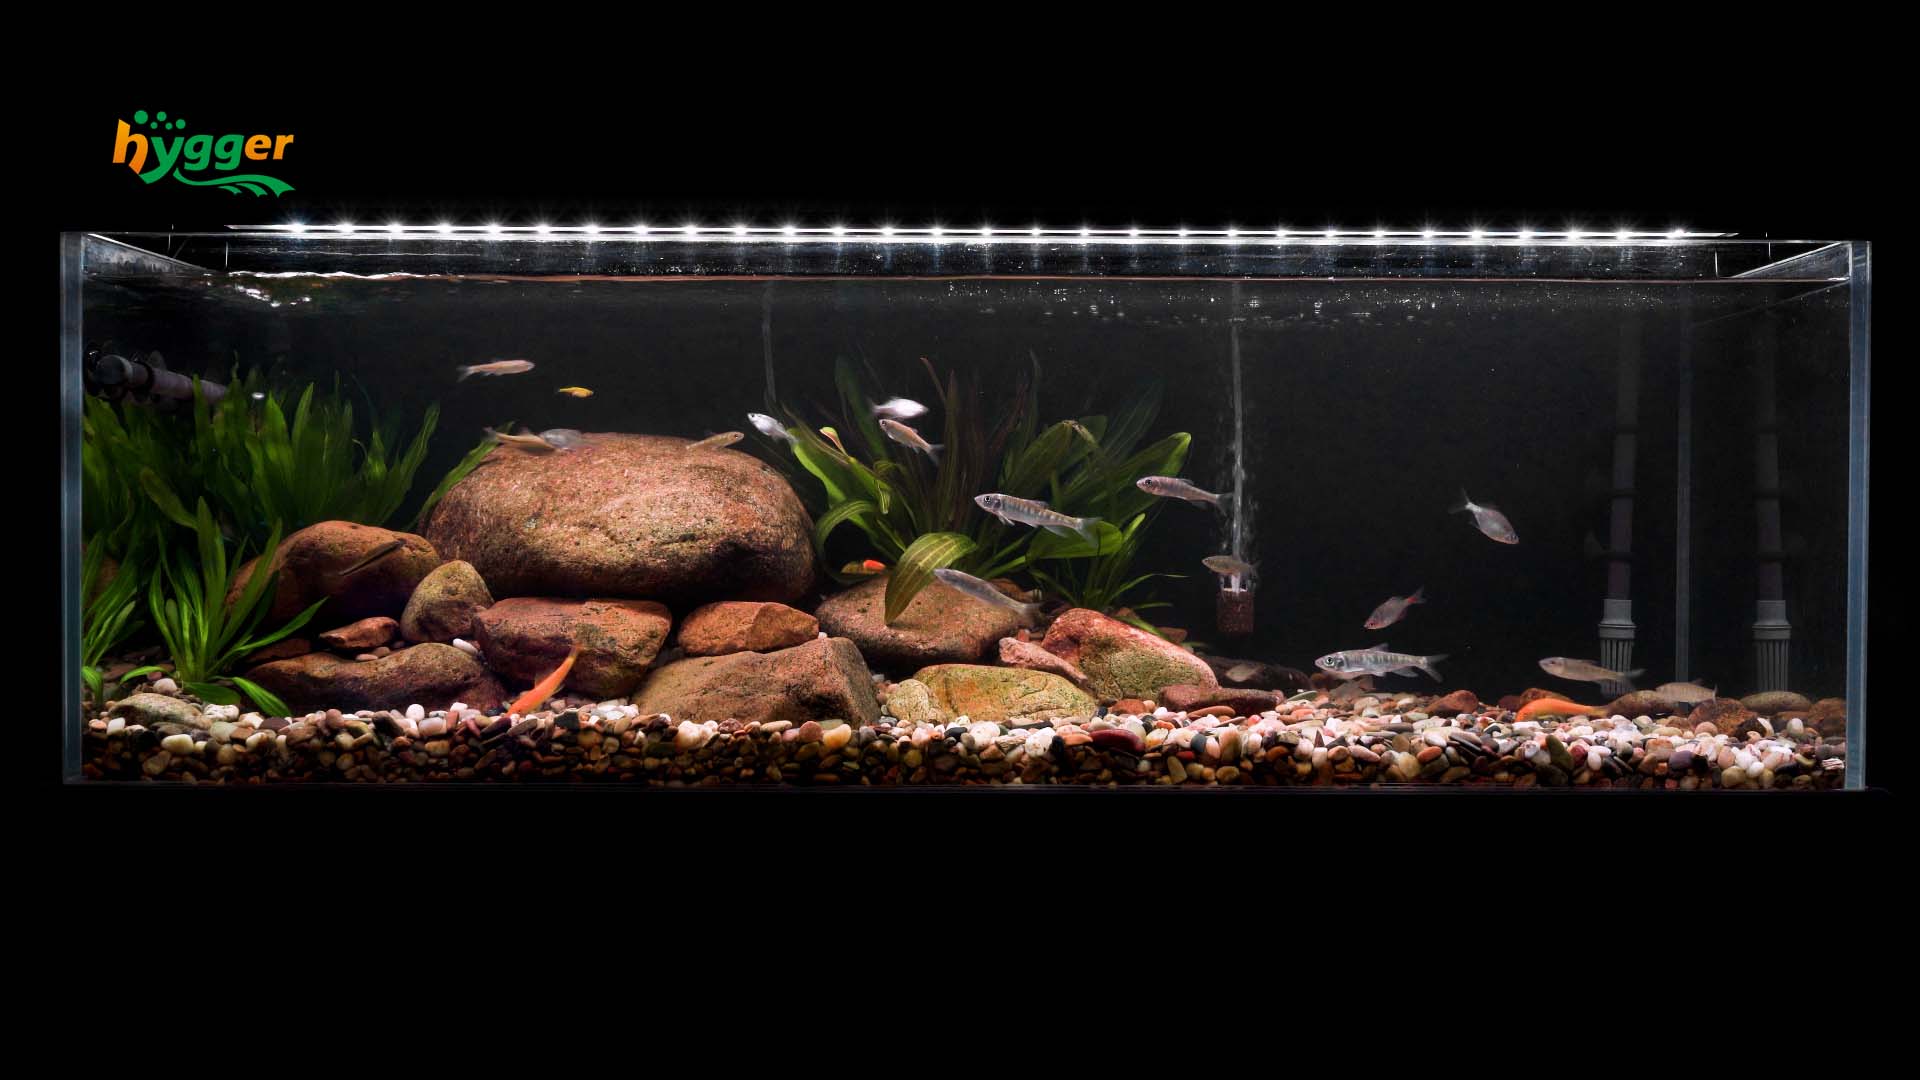 Use the Lights to Illuminate Large Aquarium Fully - hygger